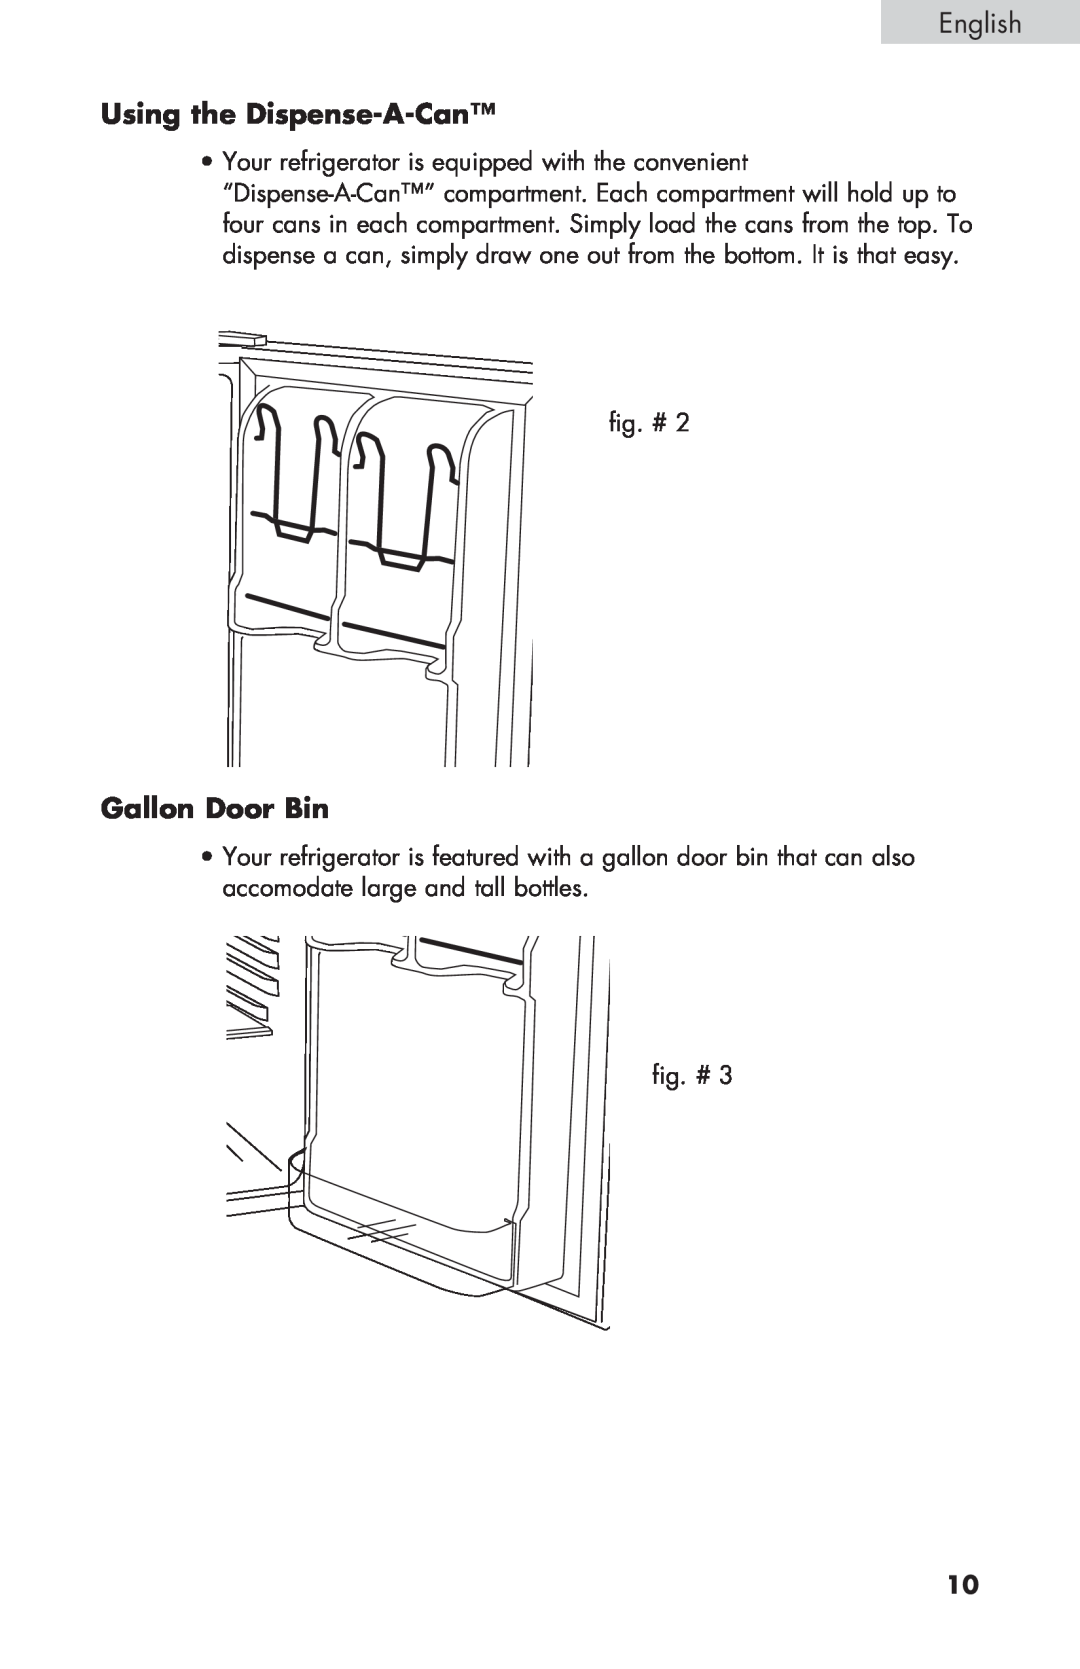 Haier HNSE032, COMPACT REFRIGERATOR manual Using the Dispense-A-Can, Gallon Door Bin, fig. # 